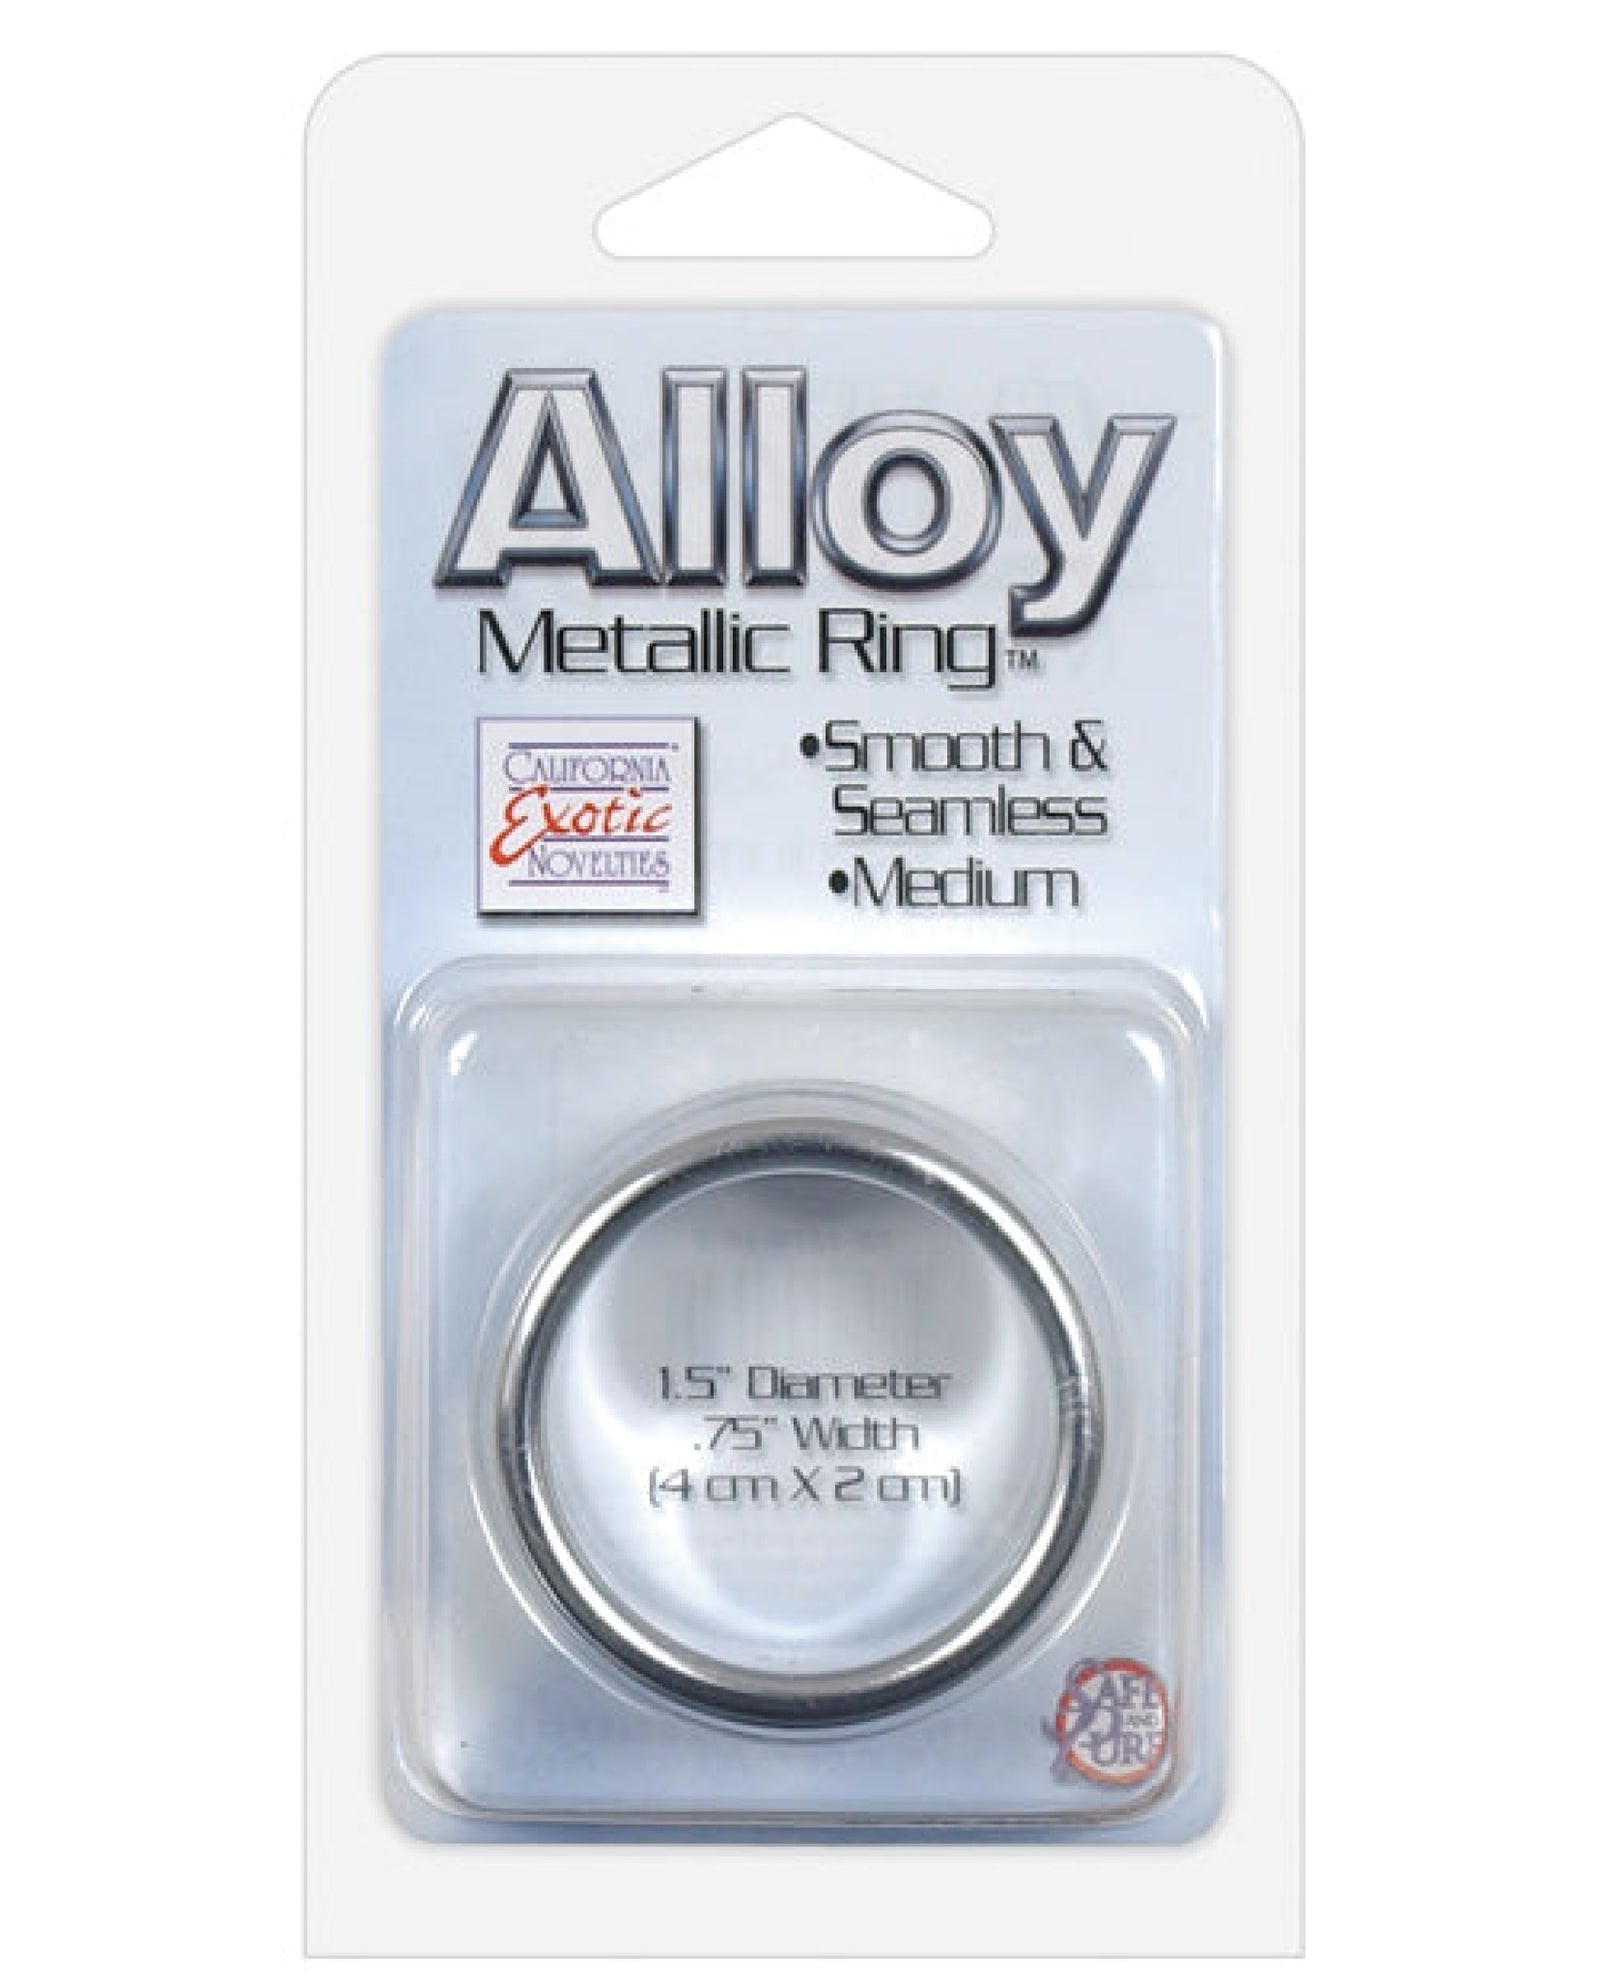 Alloy Metallic Ring CalExotics